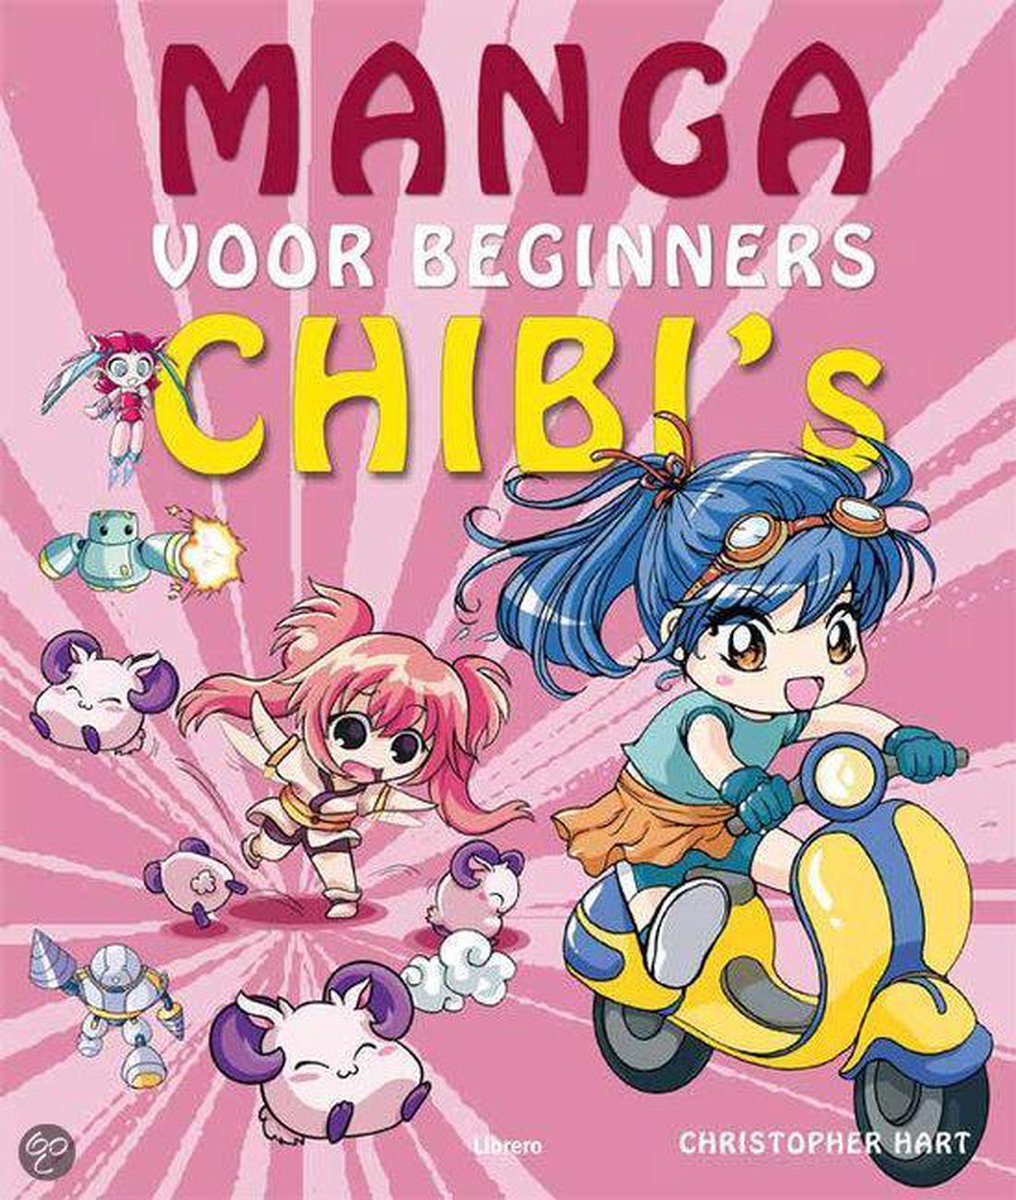 Manga Voor Beginners   Chibis